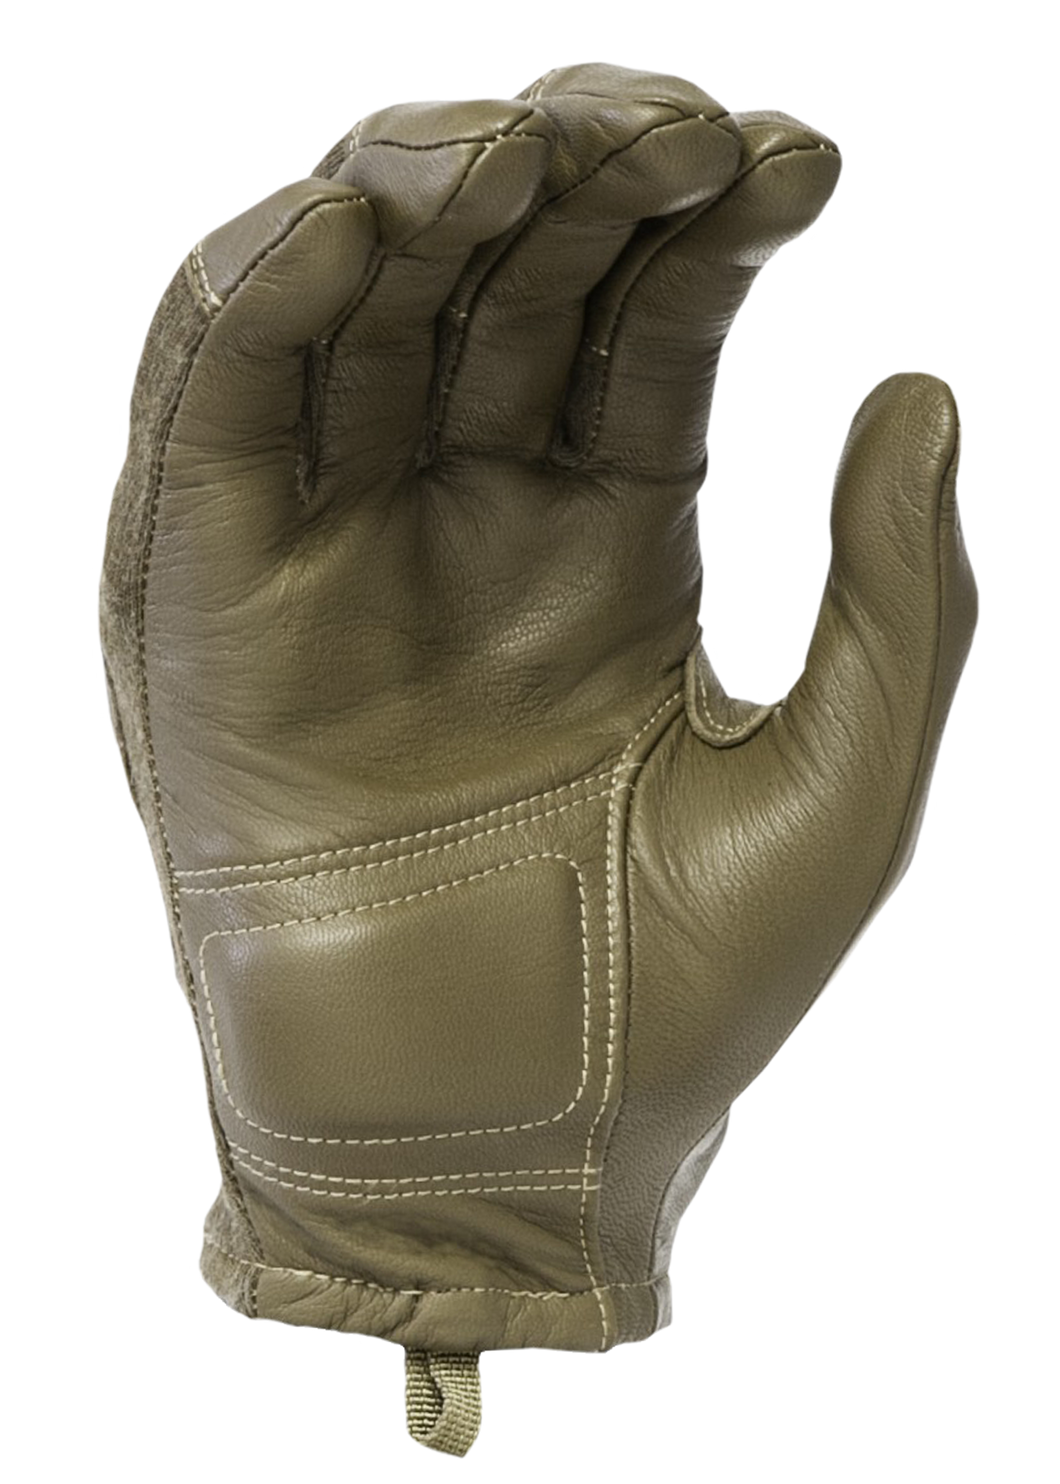 HWI Gear CG Combat Gloves